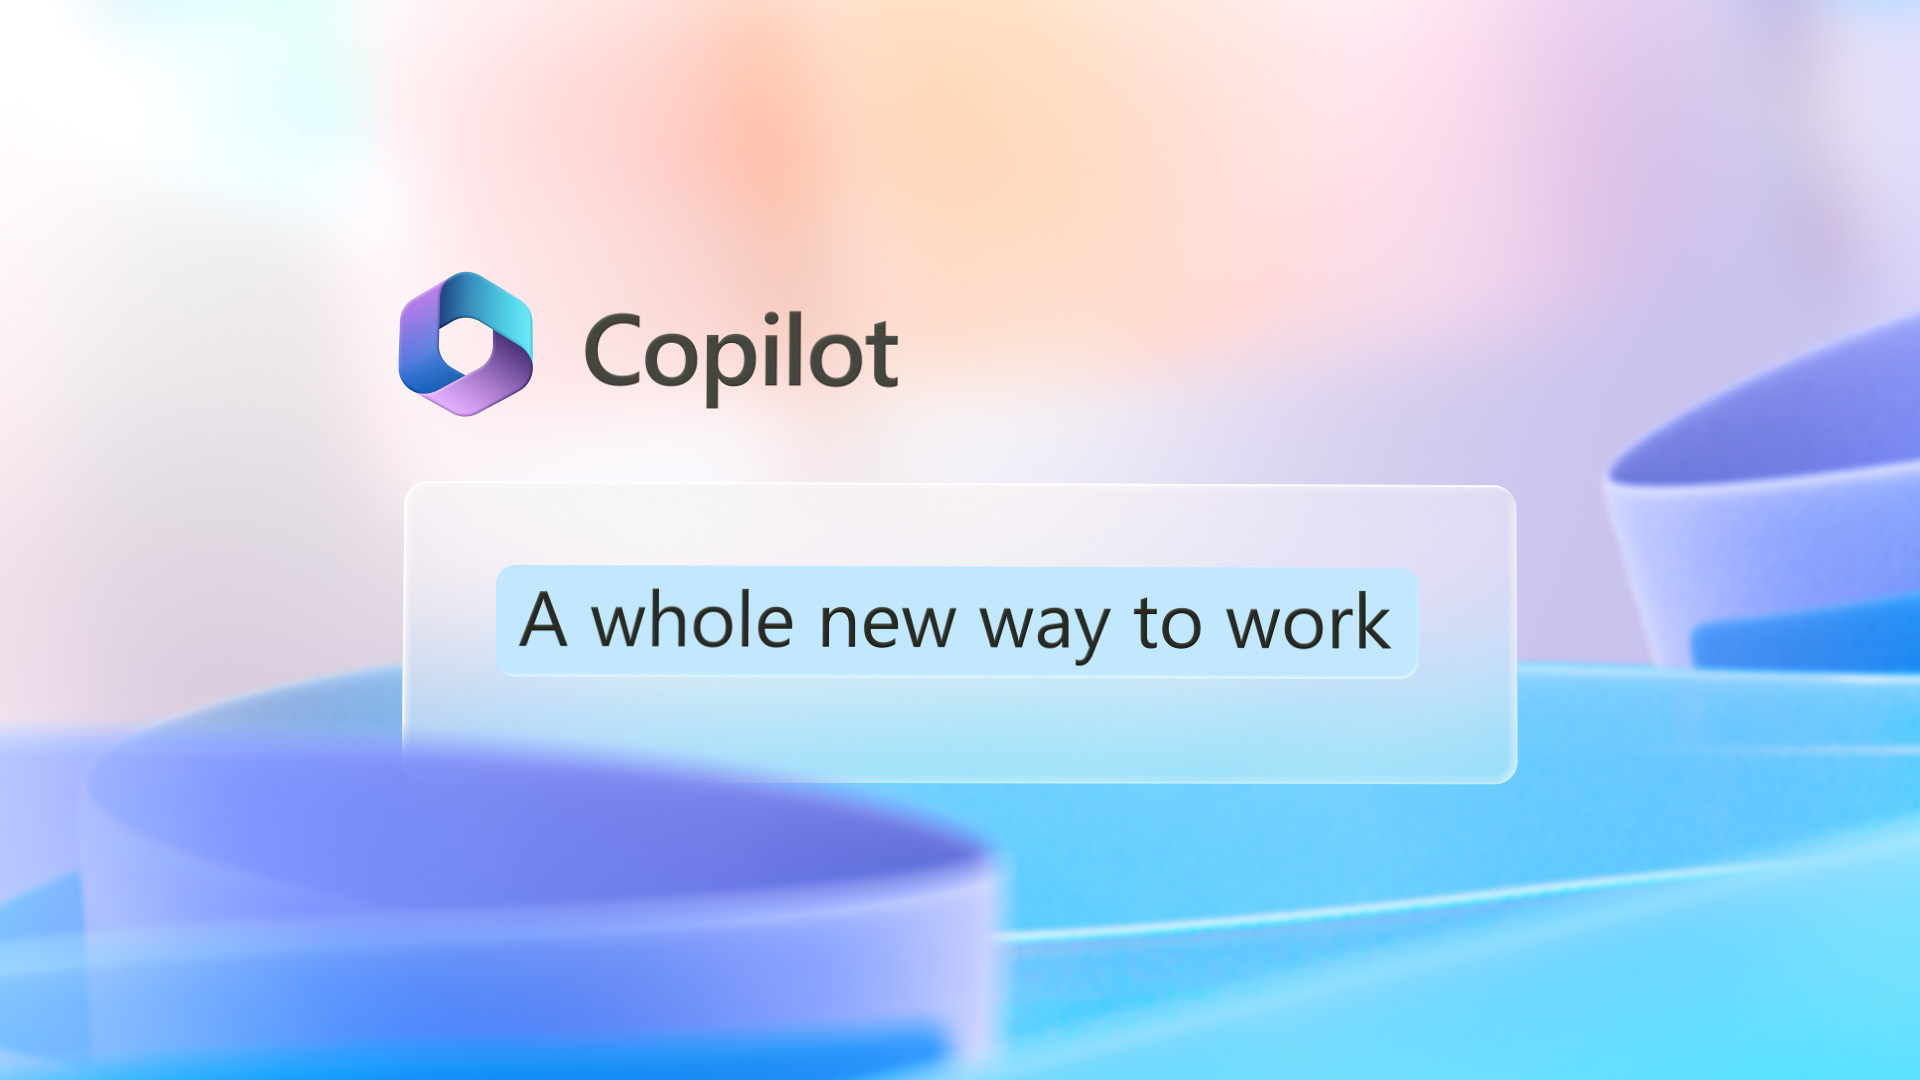 Microsoft updates Copilot AI assistant for Microsoft 365